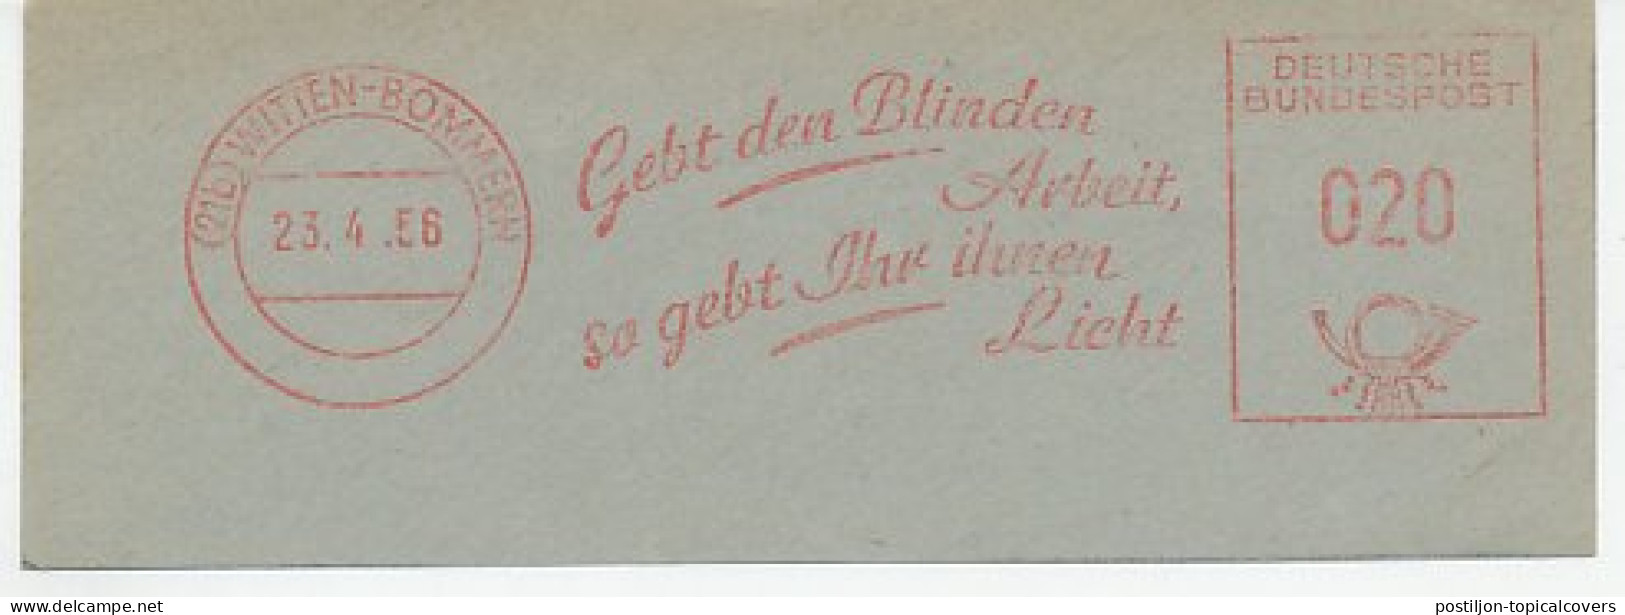 Meter Cut Germany 1956 Blind - Work - Light - Handicap